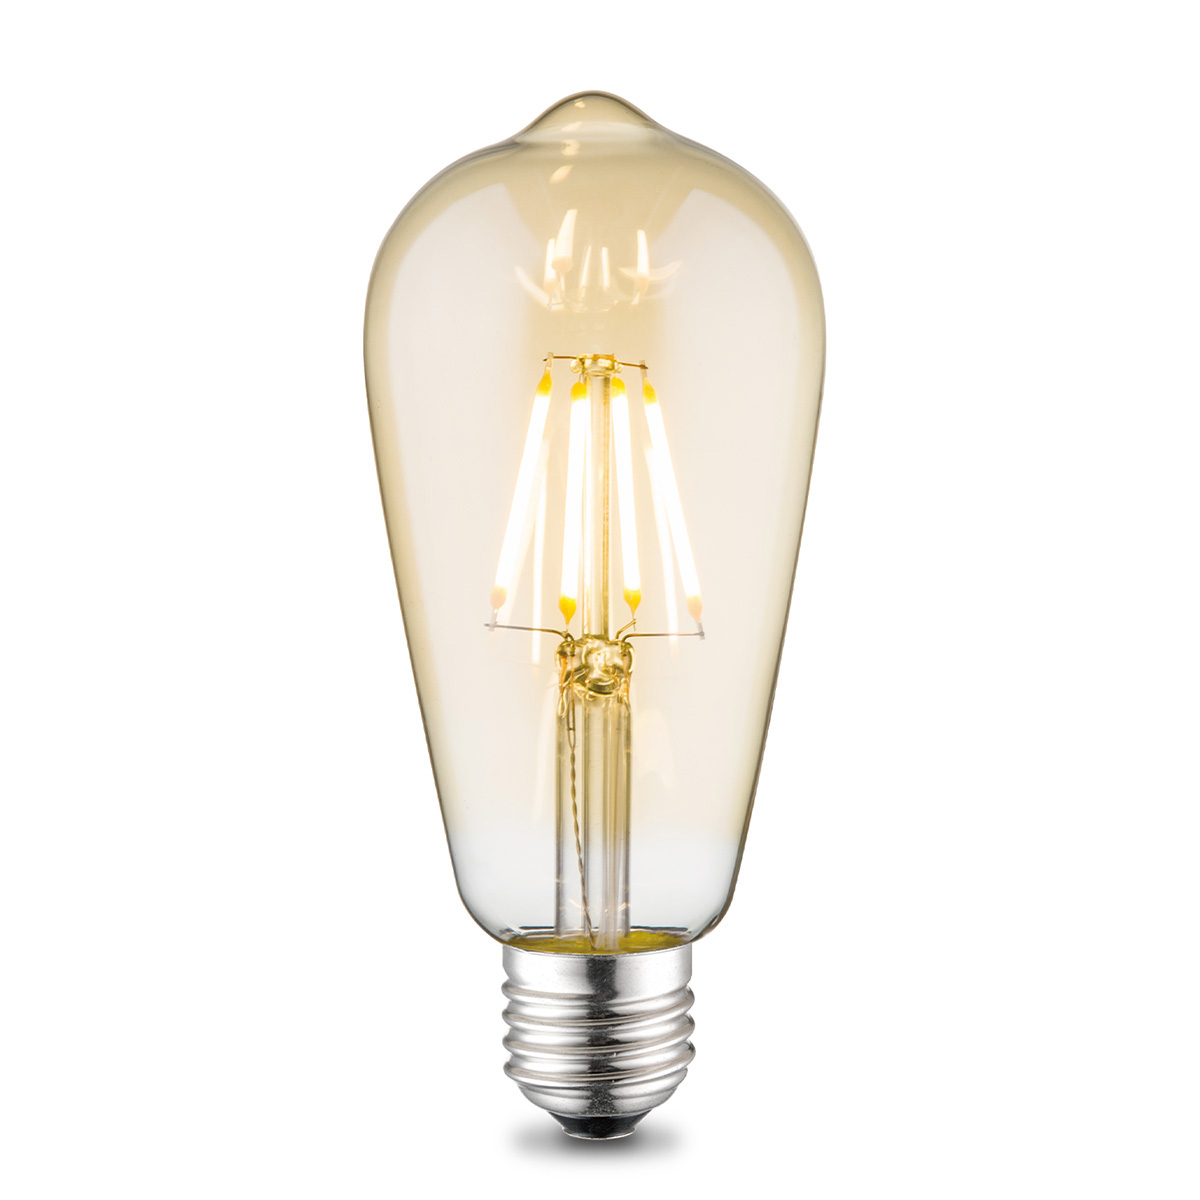 Tangla lighting - TLB-8001-04AM - LED Light Bulb Deco filament - ST64 4W amber - dimmable - E27